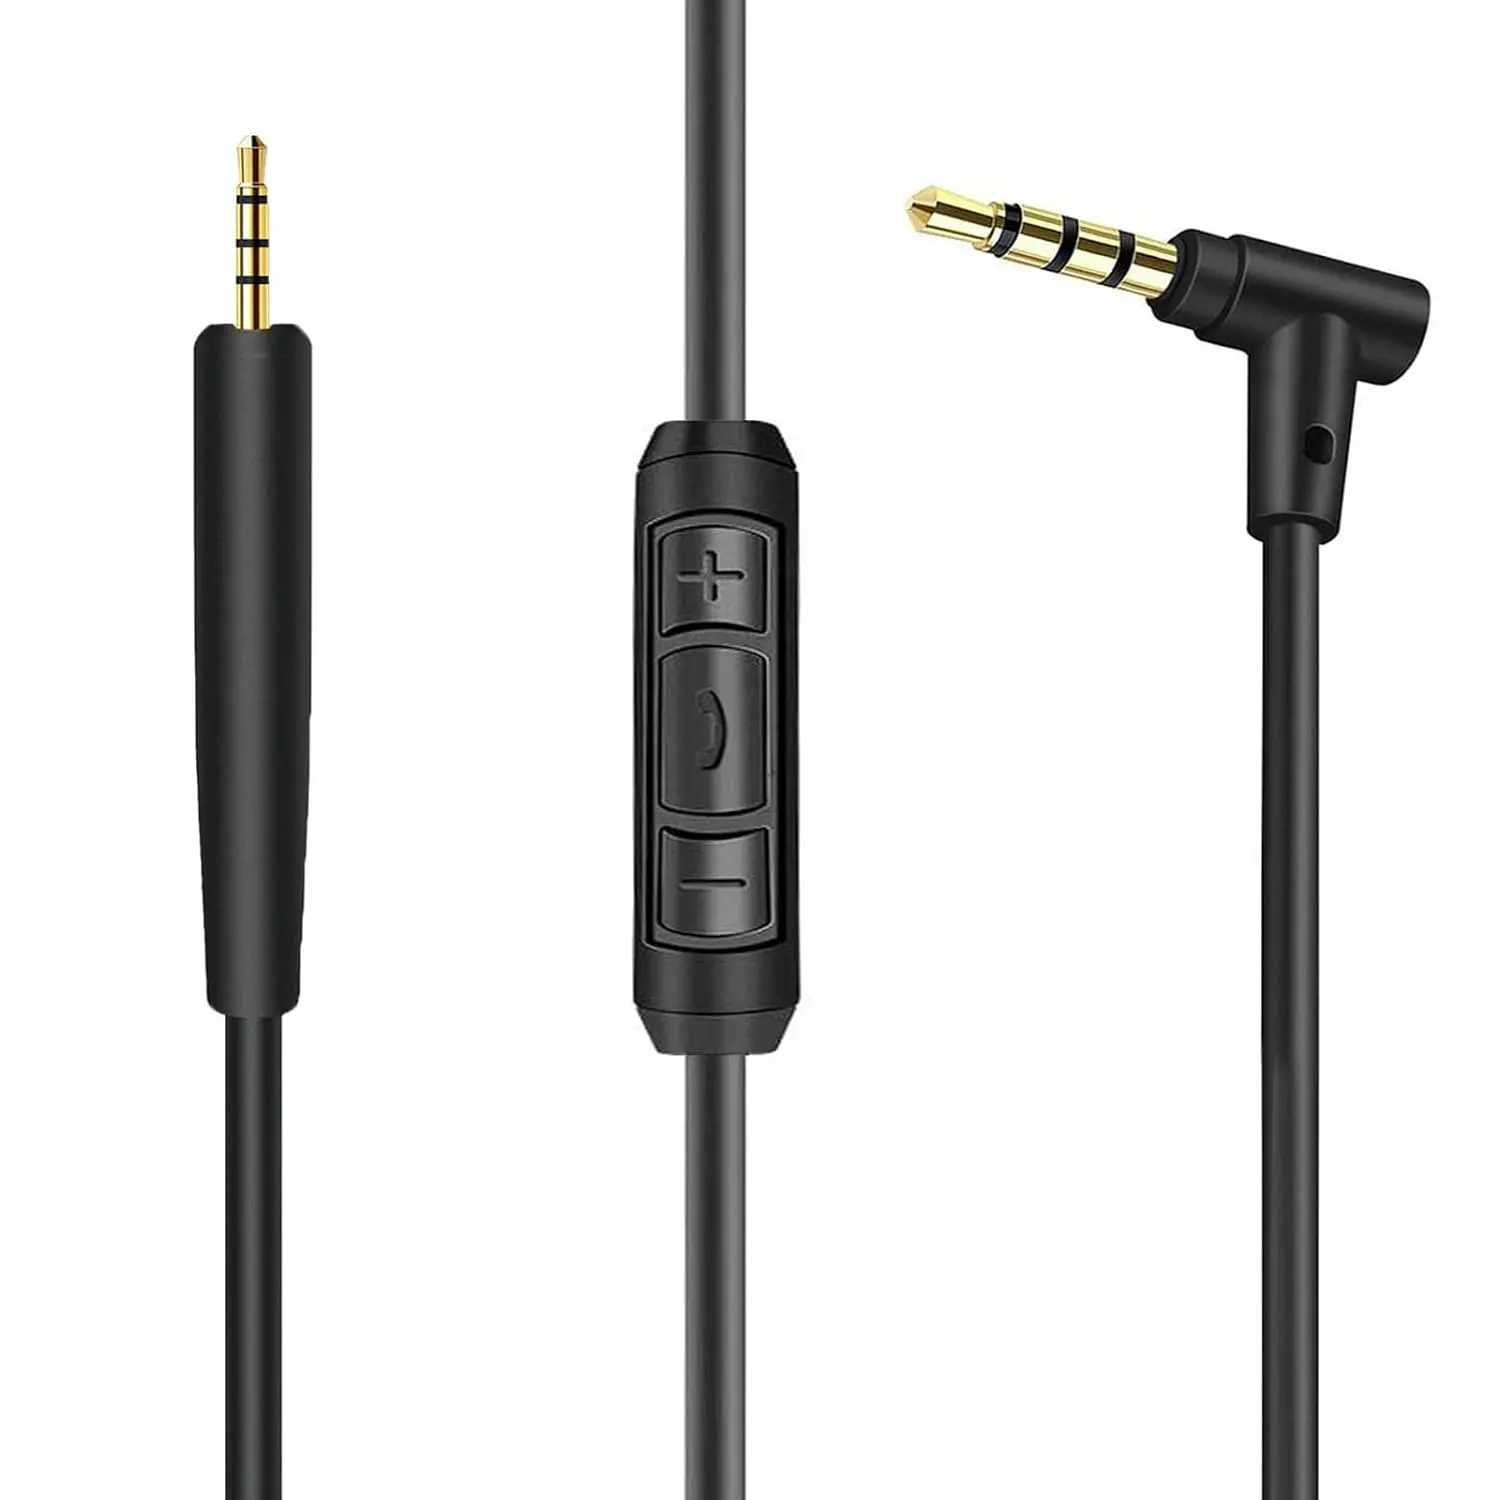 Kabel Audio pengganti 3.5mm hingga 2.5mm kabel Jack Stereo untuk headphone Bose QC25 mikrofon Inline/kontrol jarak jauh